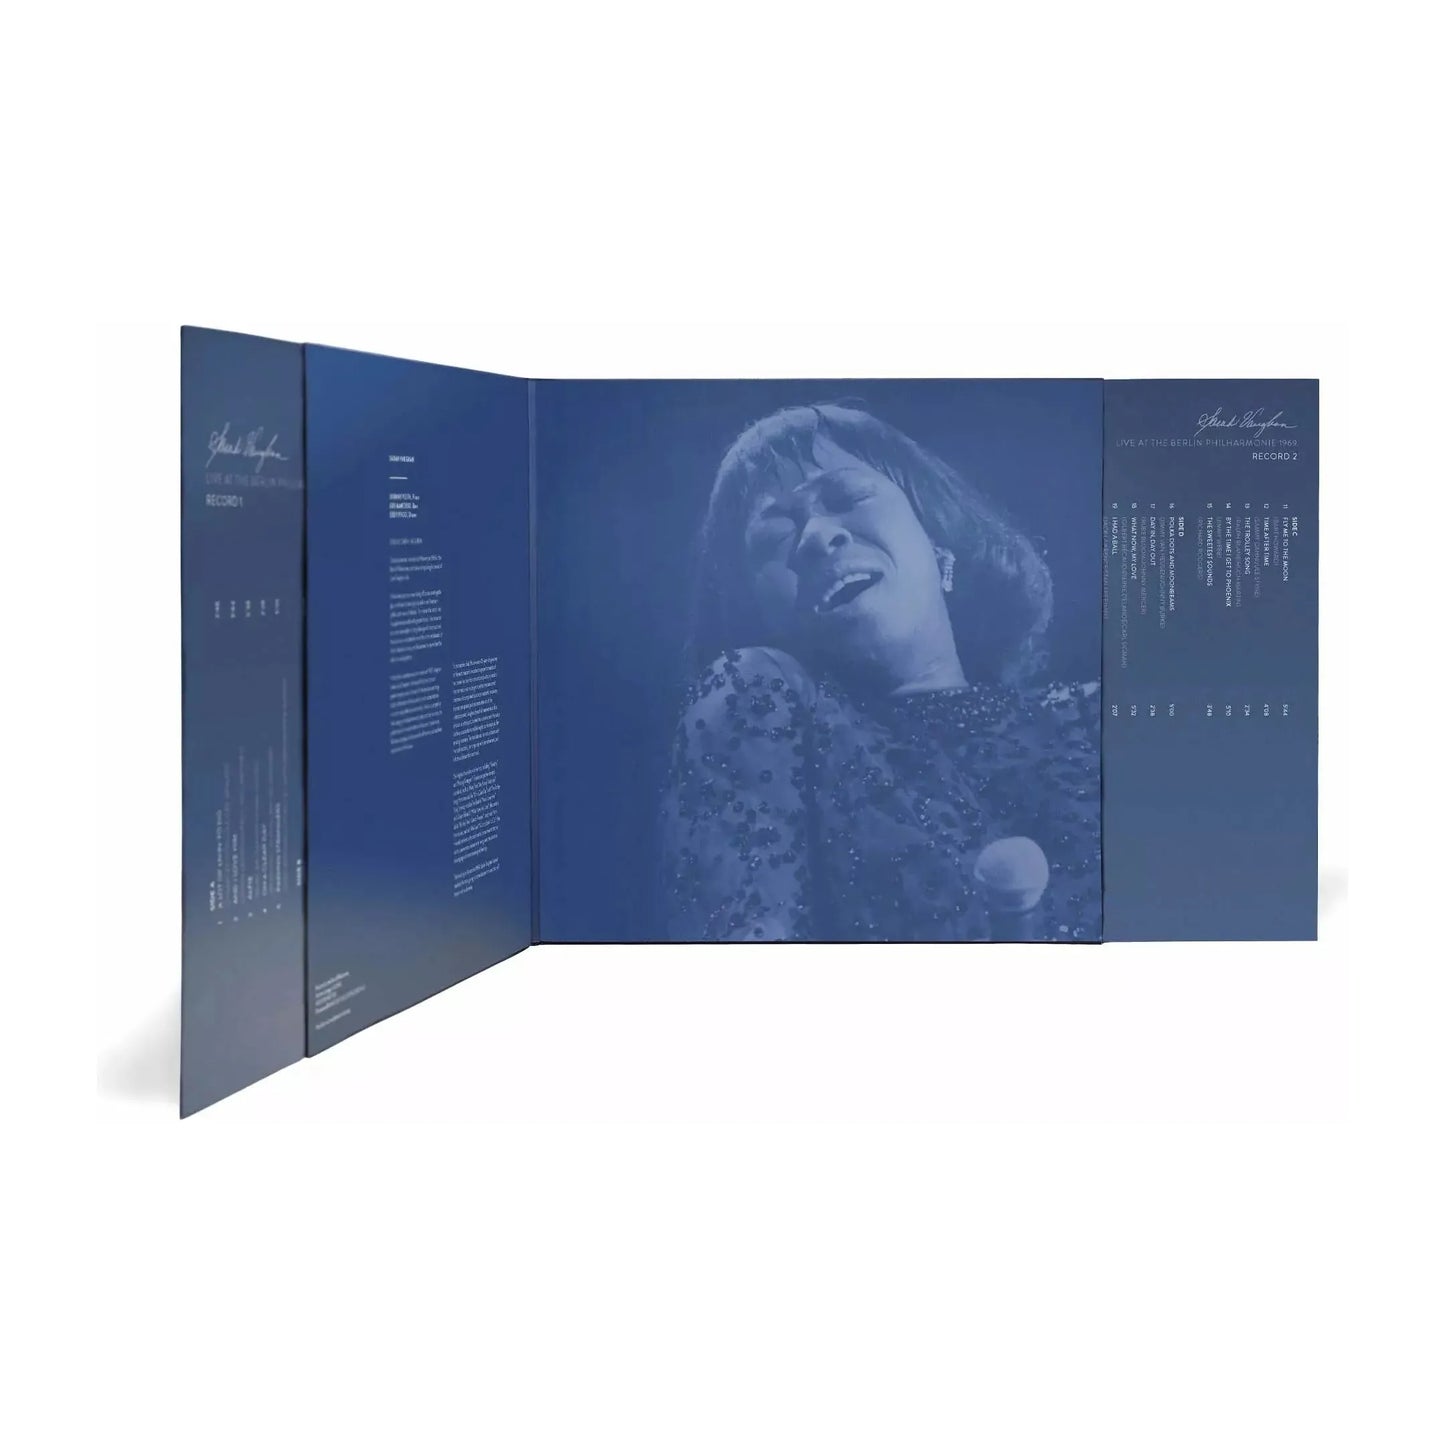 Sarah Vaughan - Live At The Berlin Philharmonie 1969 - The Lost Recordings LP